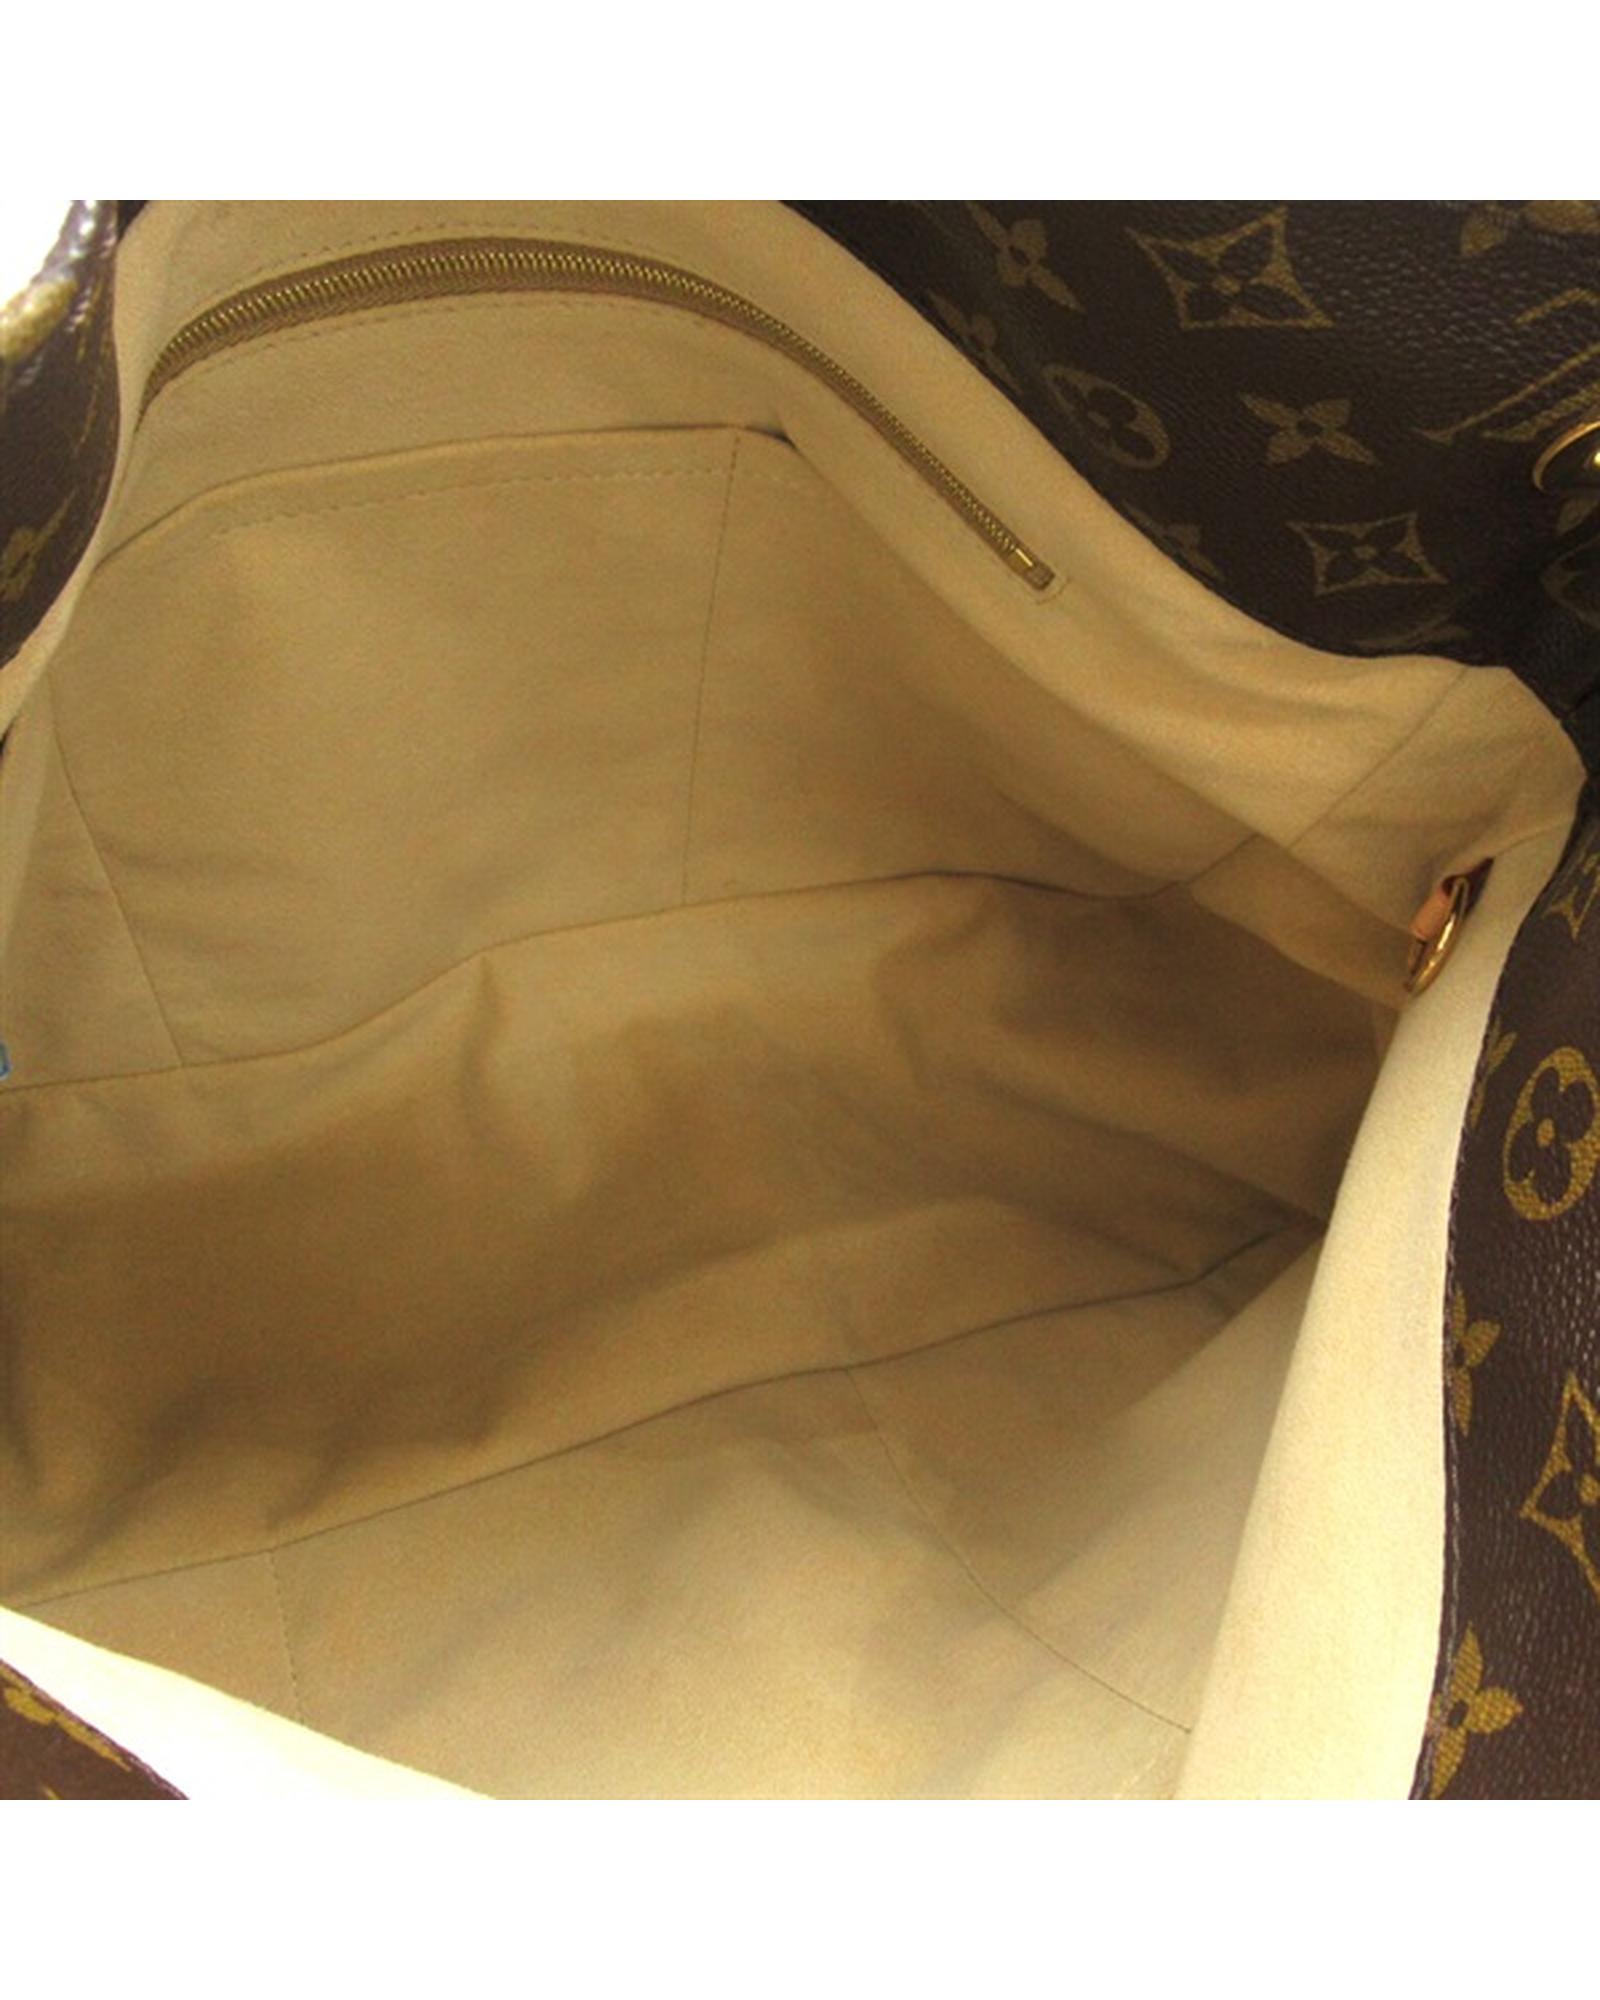 Pre Loved Louis Vuitton Monogram Artsy MM Bag in Excellent Condition ...